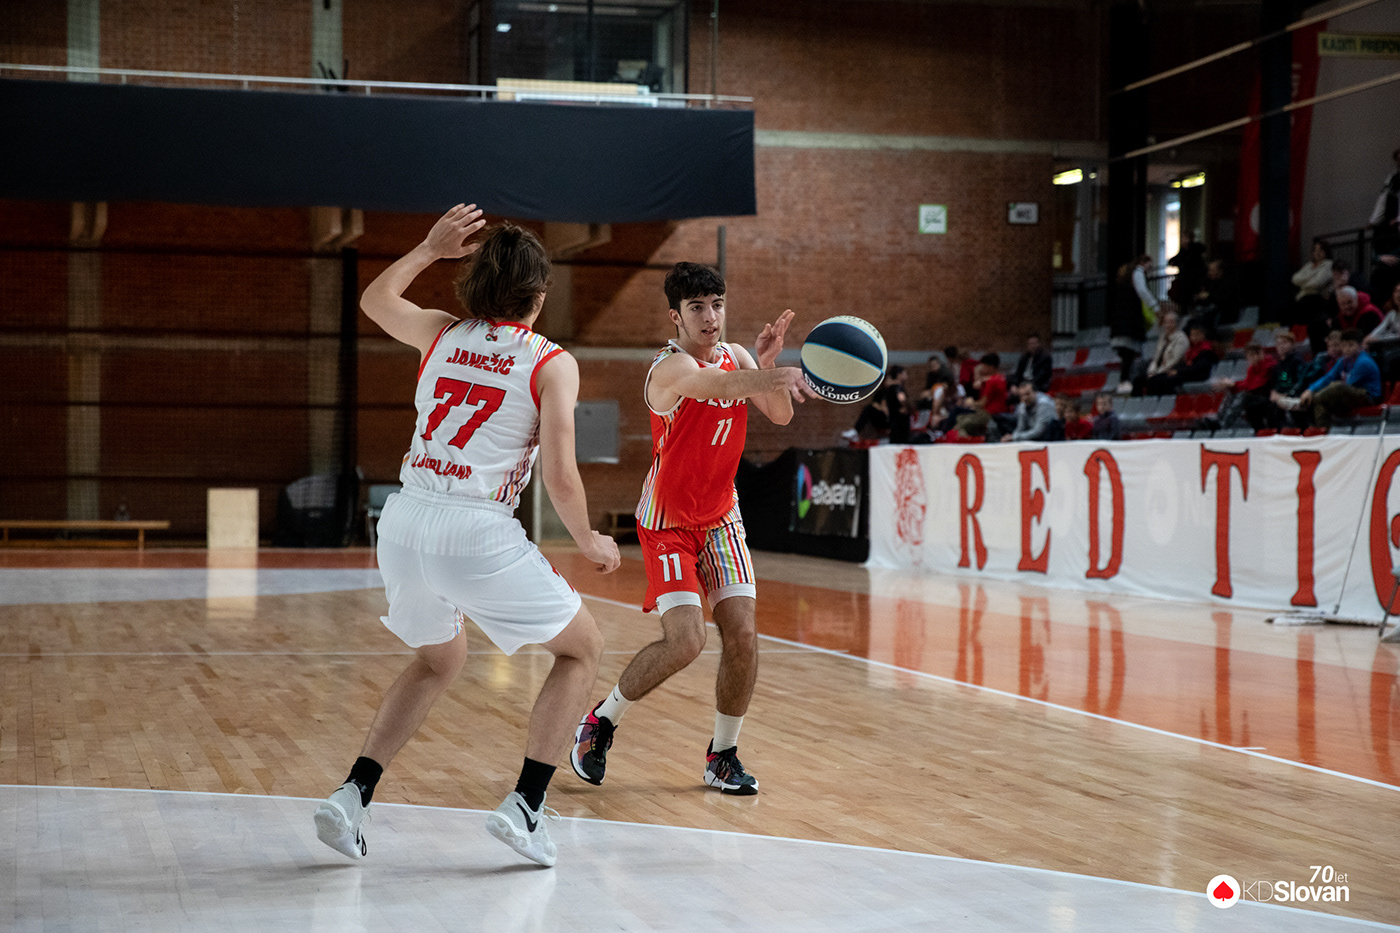 basketball Canon photoshoot reportage photography sports